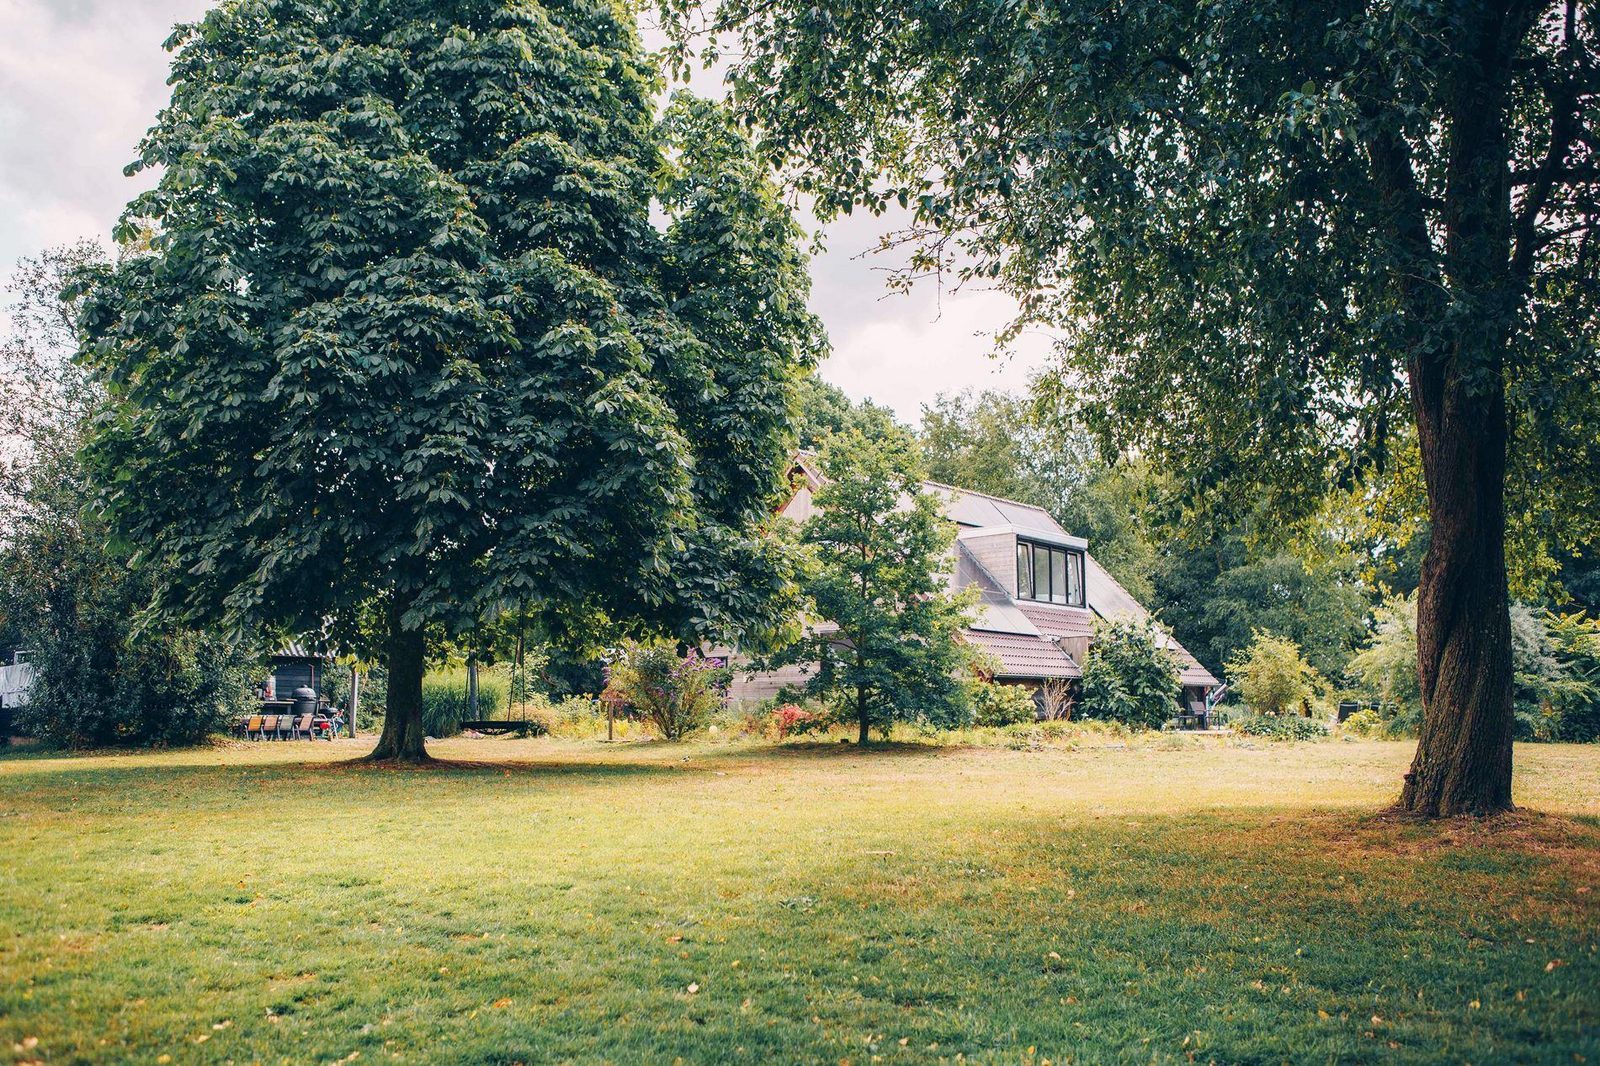 Huize Stoffels familiehuis op de Veluwe